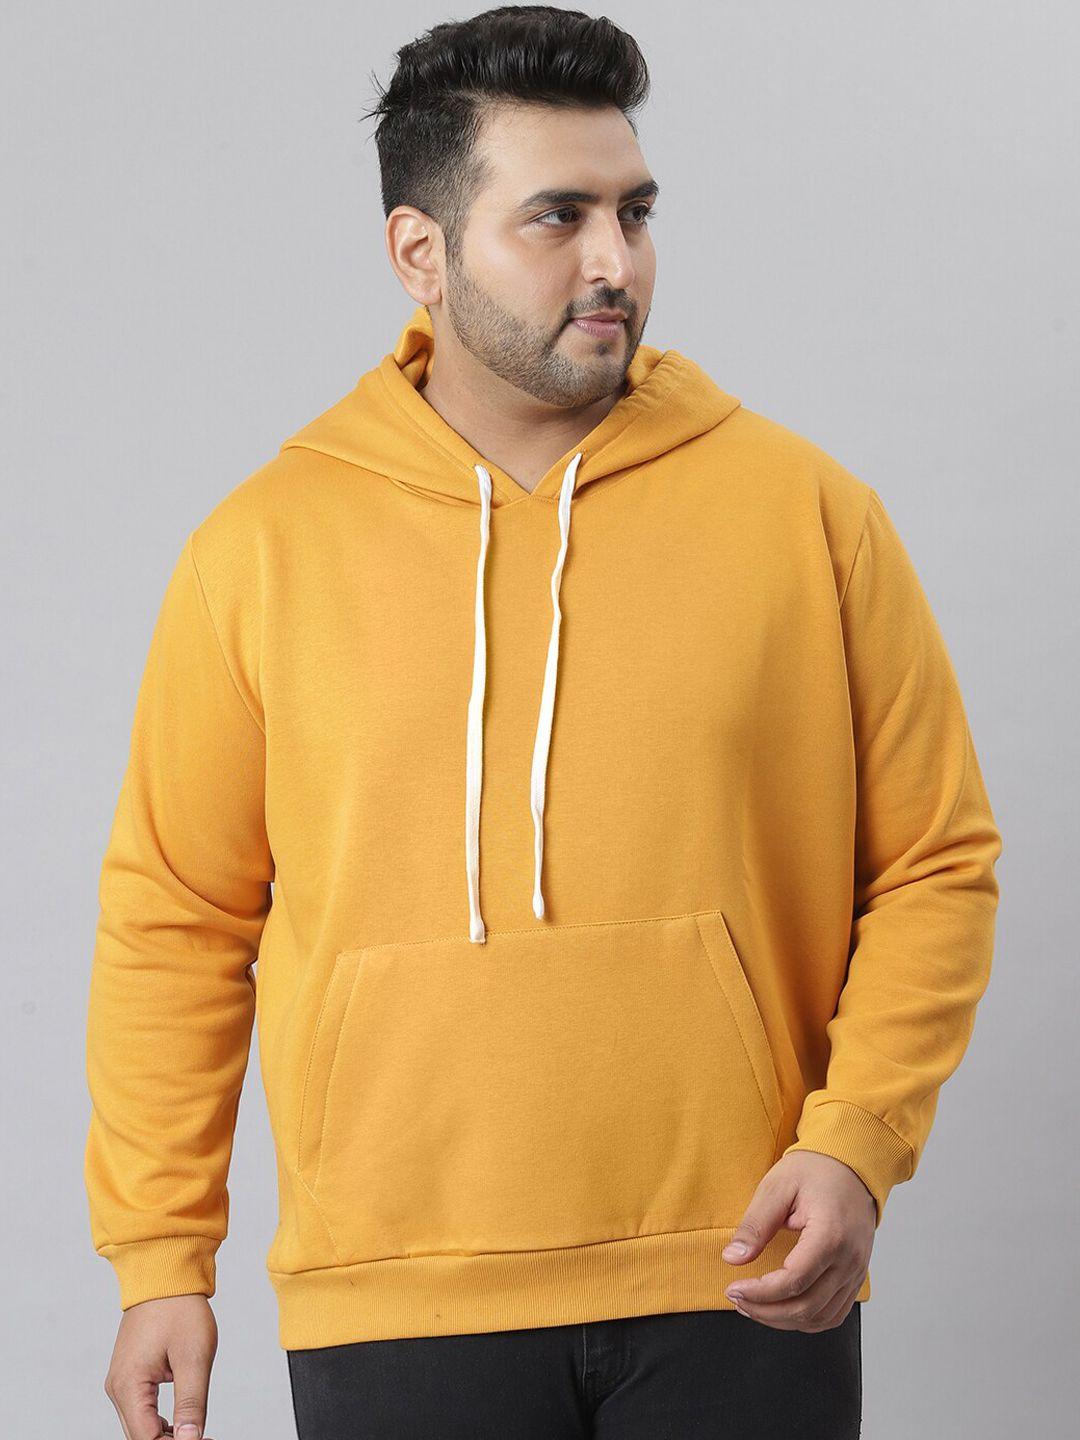 instafab-plus-men-mustard-yellow-hooded-sweatshirt